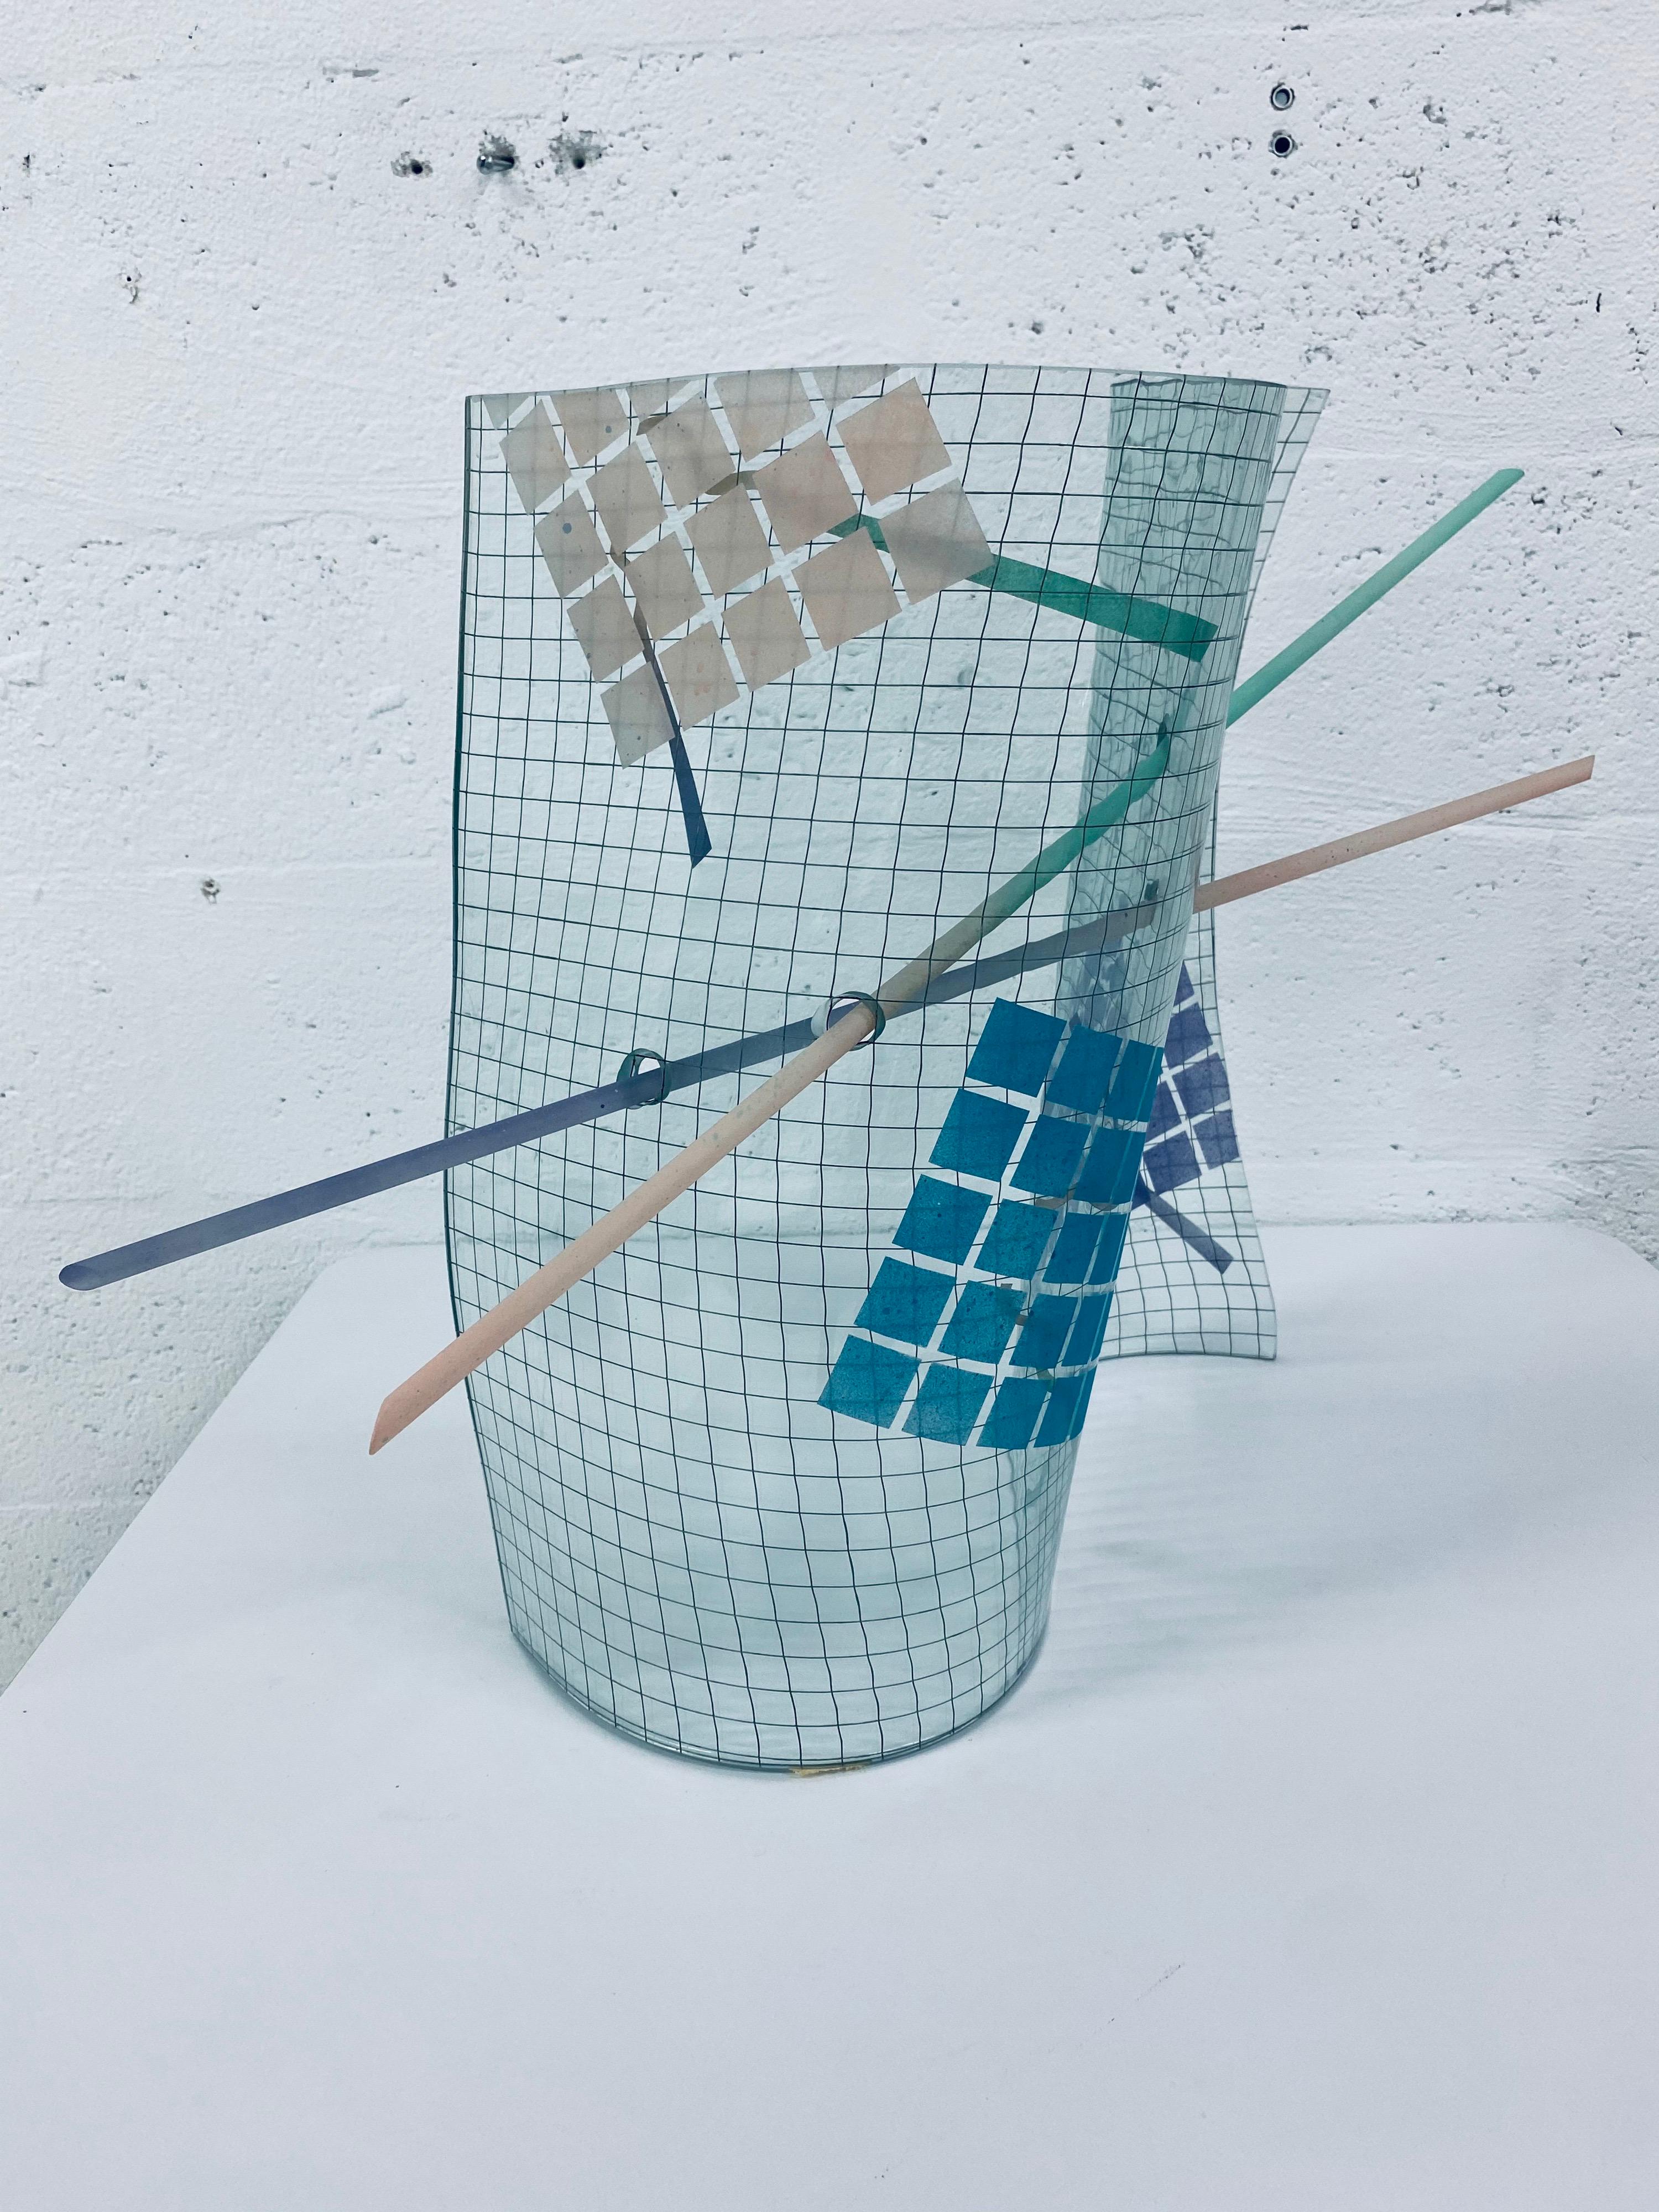 Postmodern Memphis Style Glass Sculpture by Runstadler Studios # 6/25, 1989 2